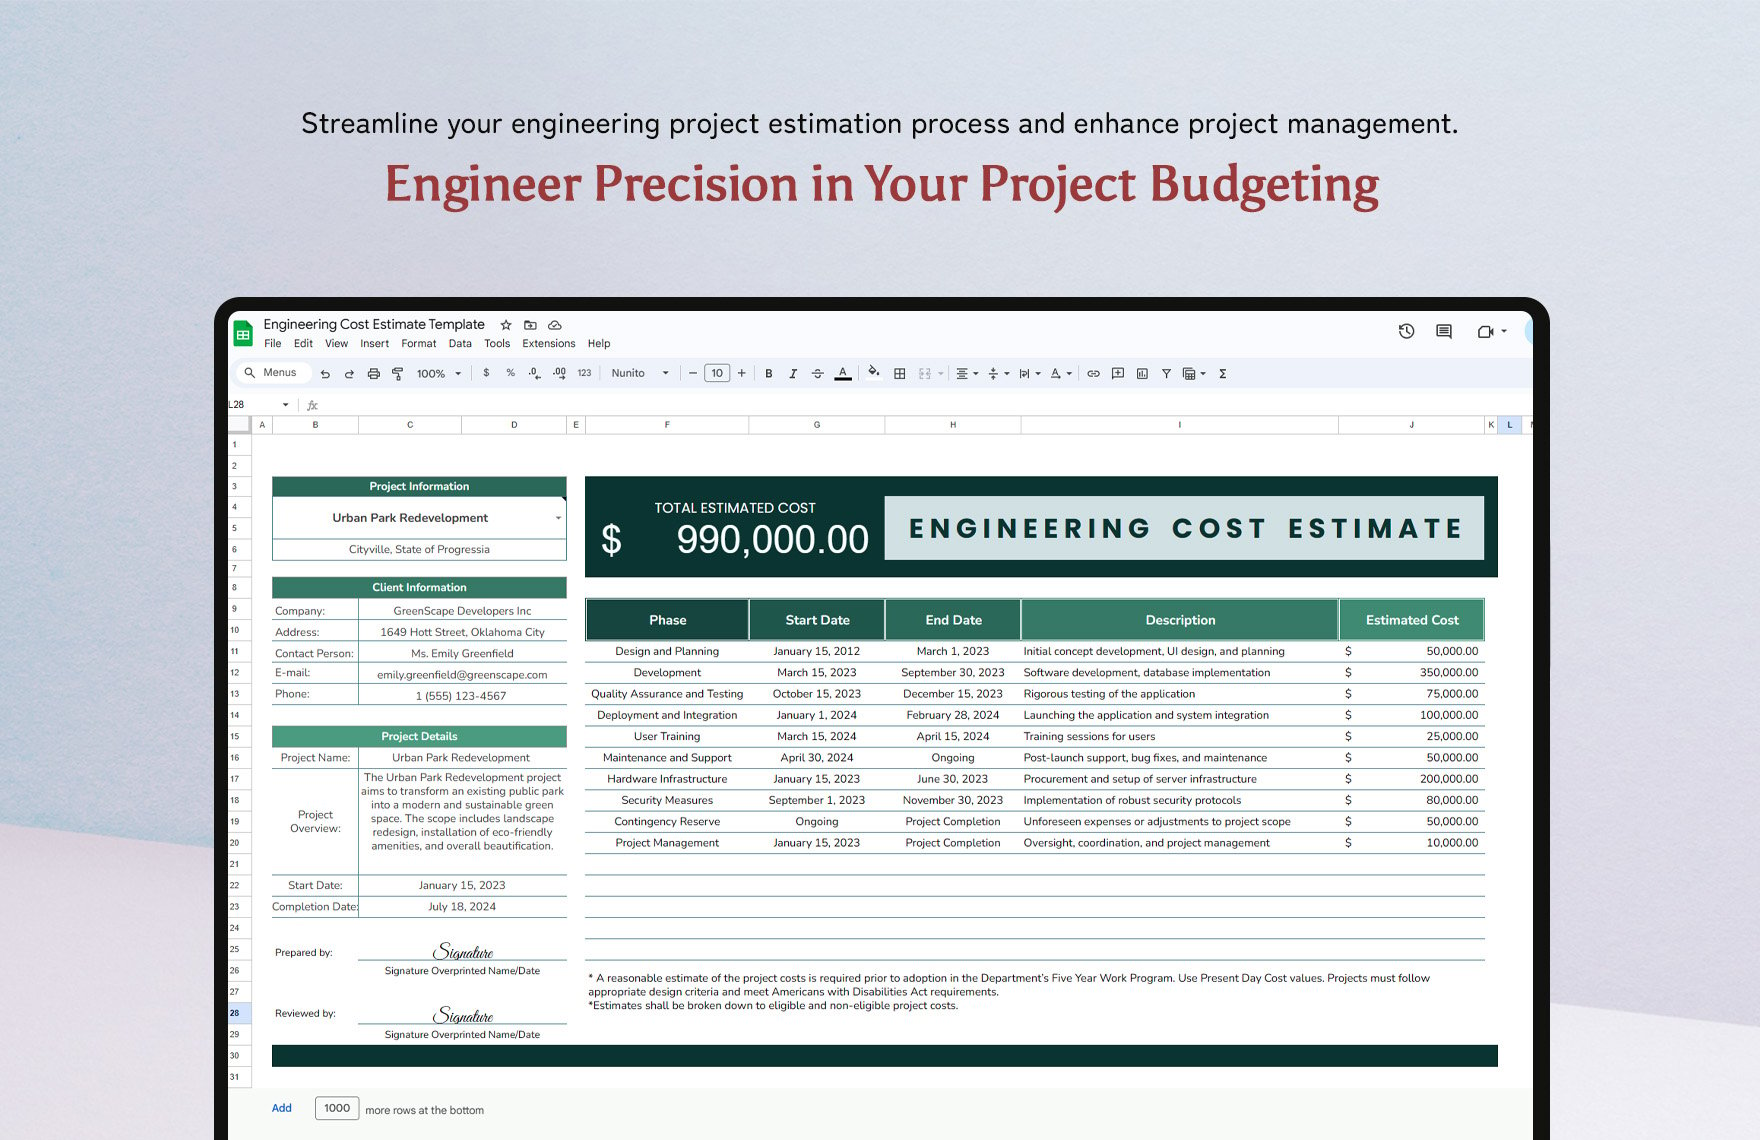 Engineering Cost Estimate Template